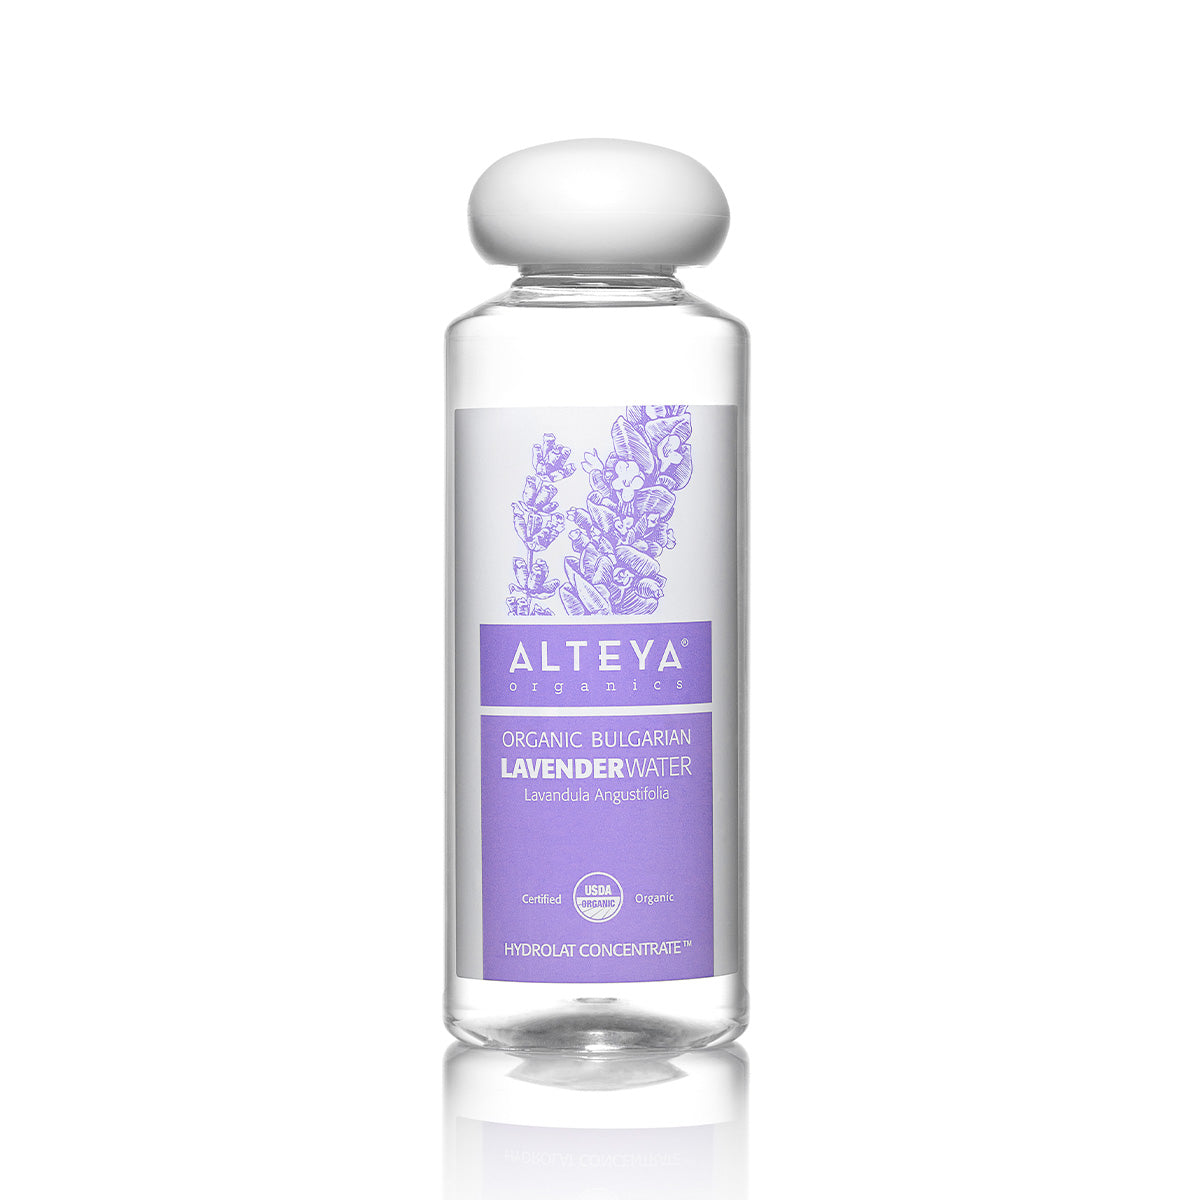 An Bulgarian Lavender Water 8.5 Fl Oz bottle of lavendar water on a white background, by Alteya Organics.